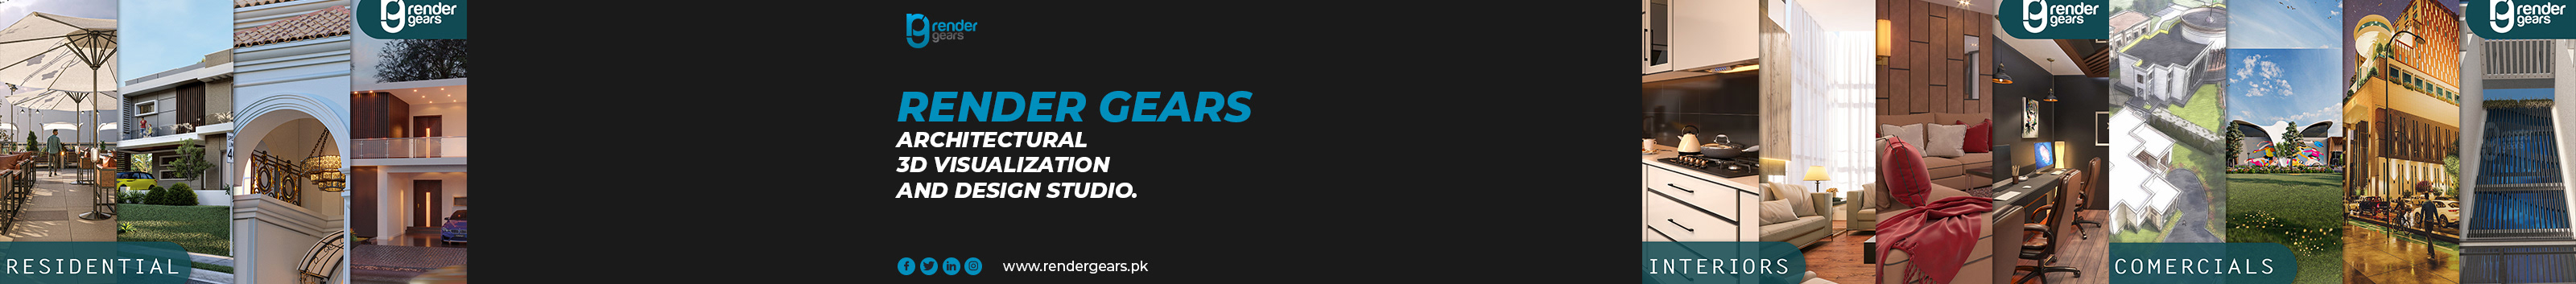 Render Gears's profile banner